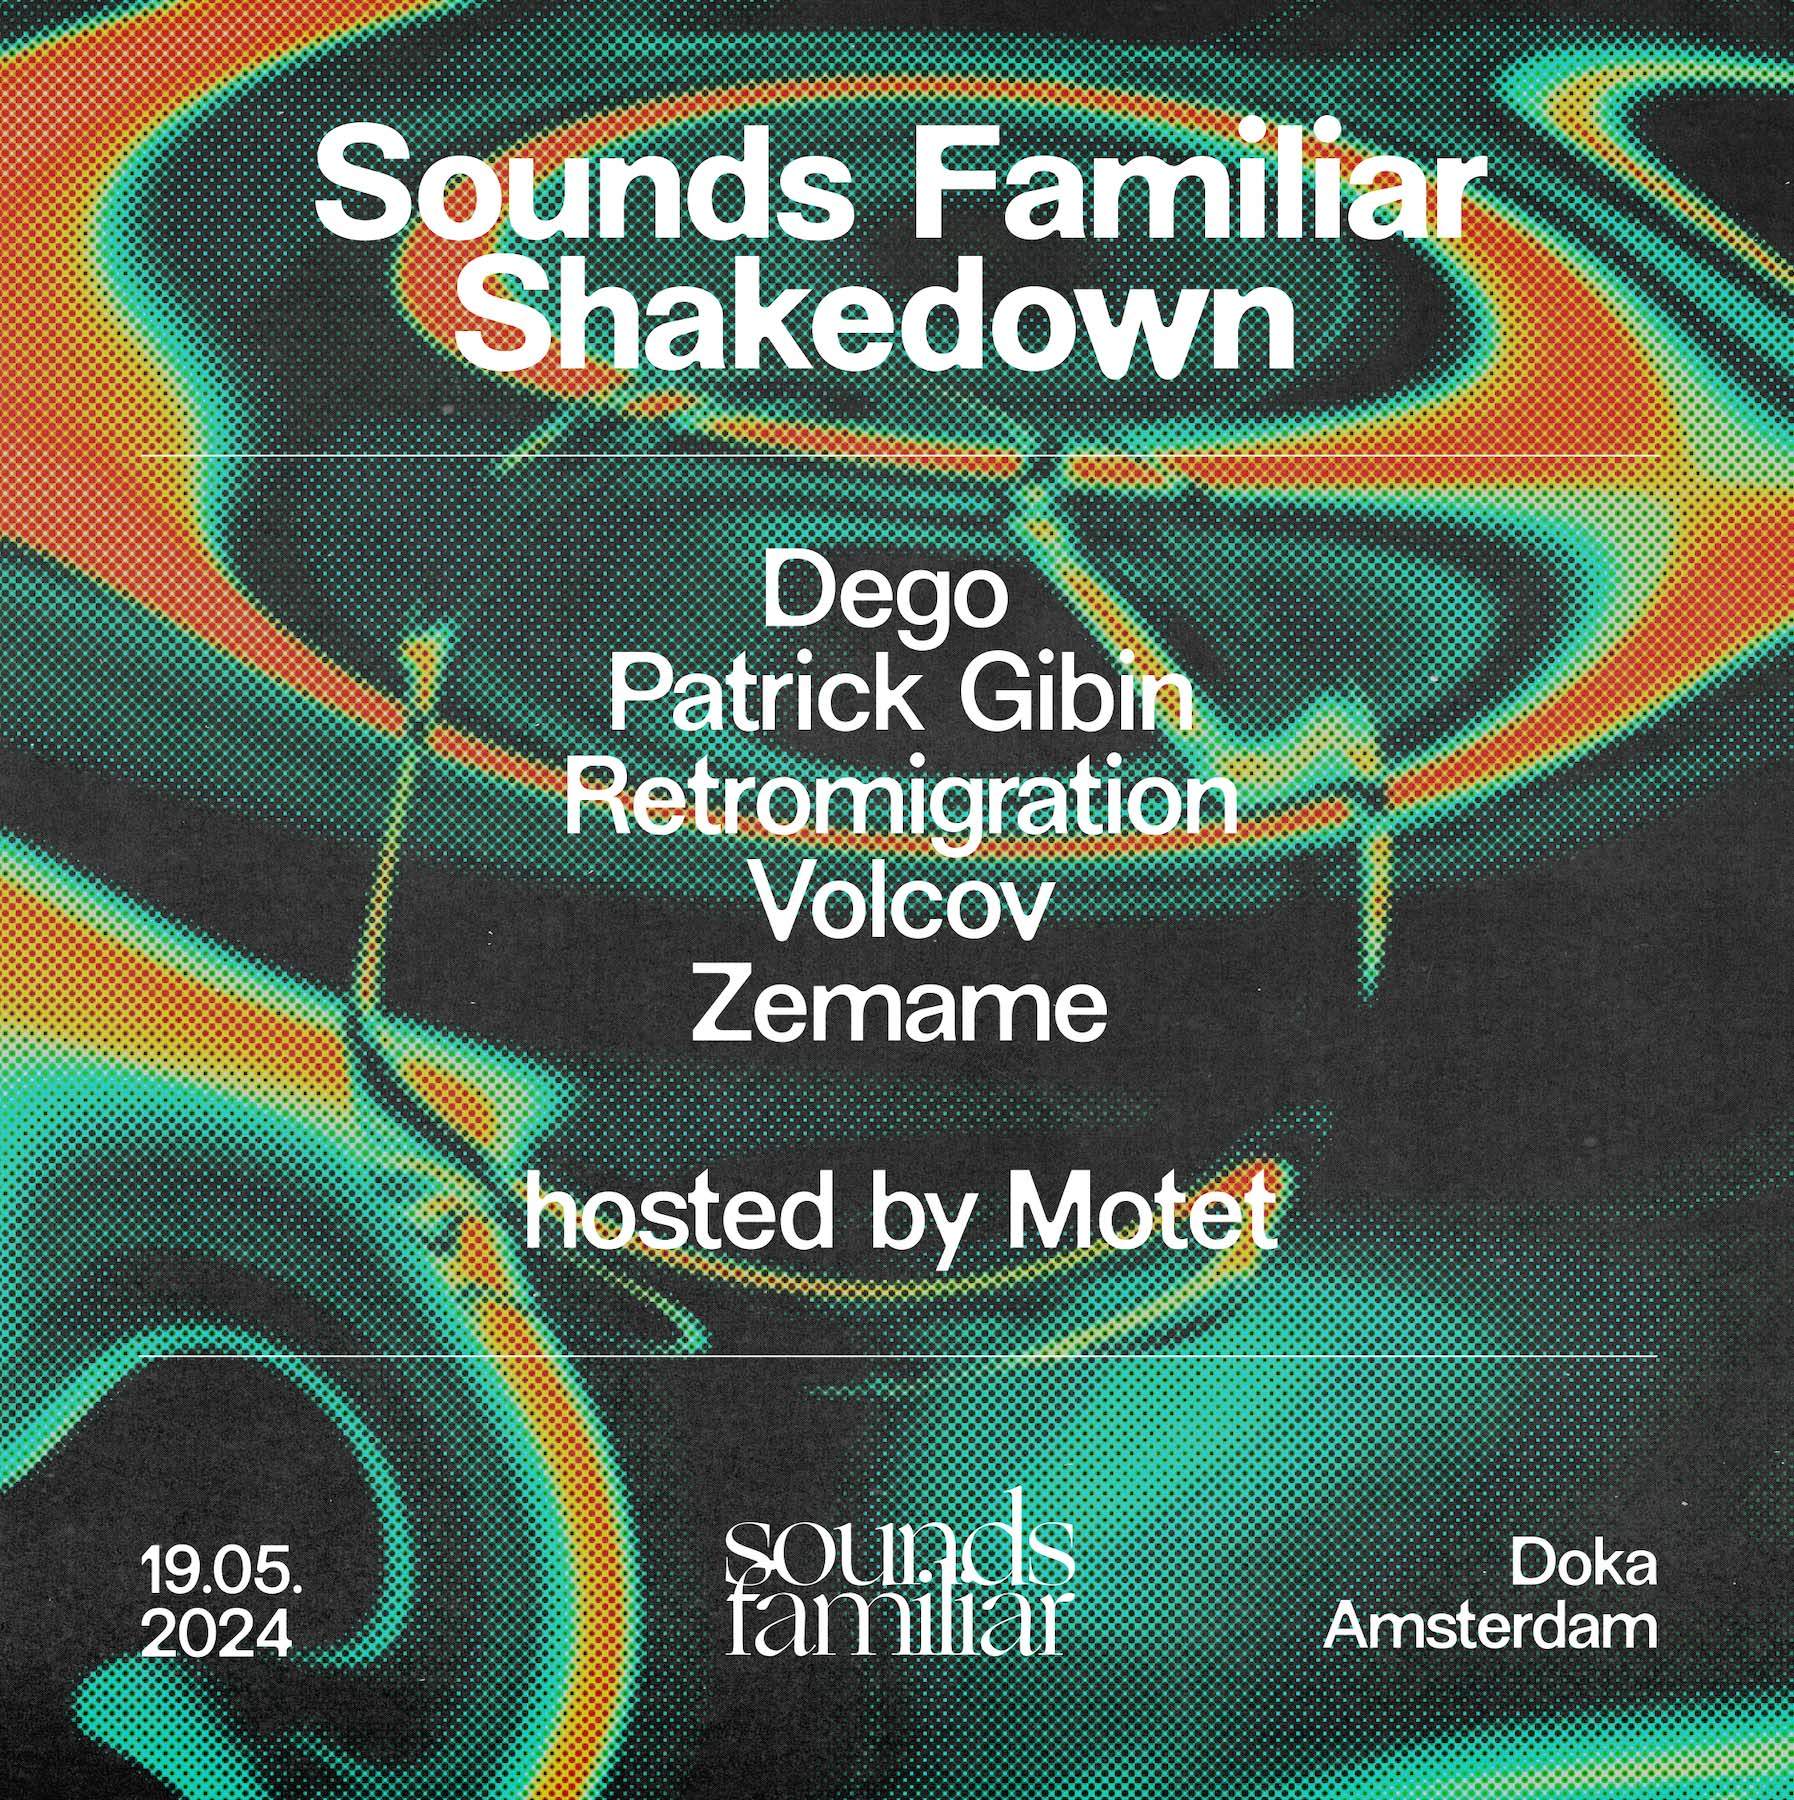 Sounds Familiar Shakedown x Doka Studio with Dego - Patrick Gibin - Volcov - フライヤー表